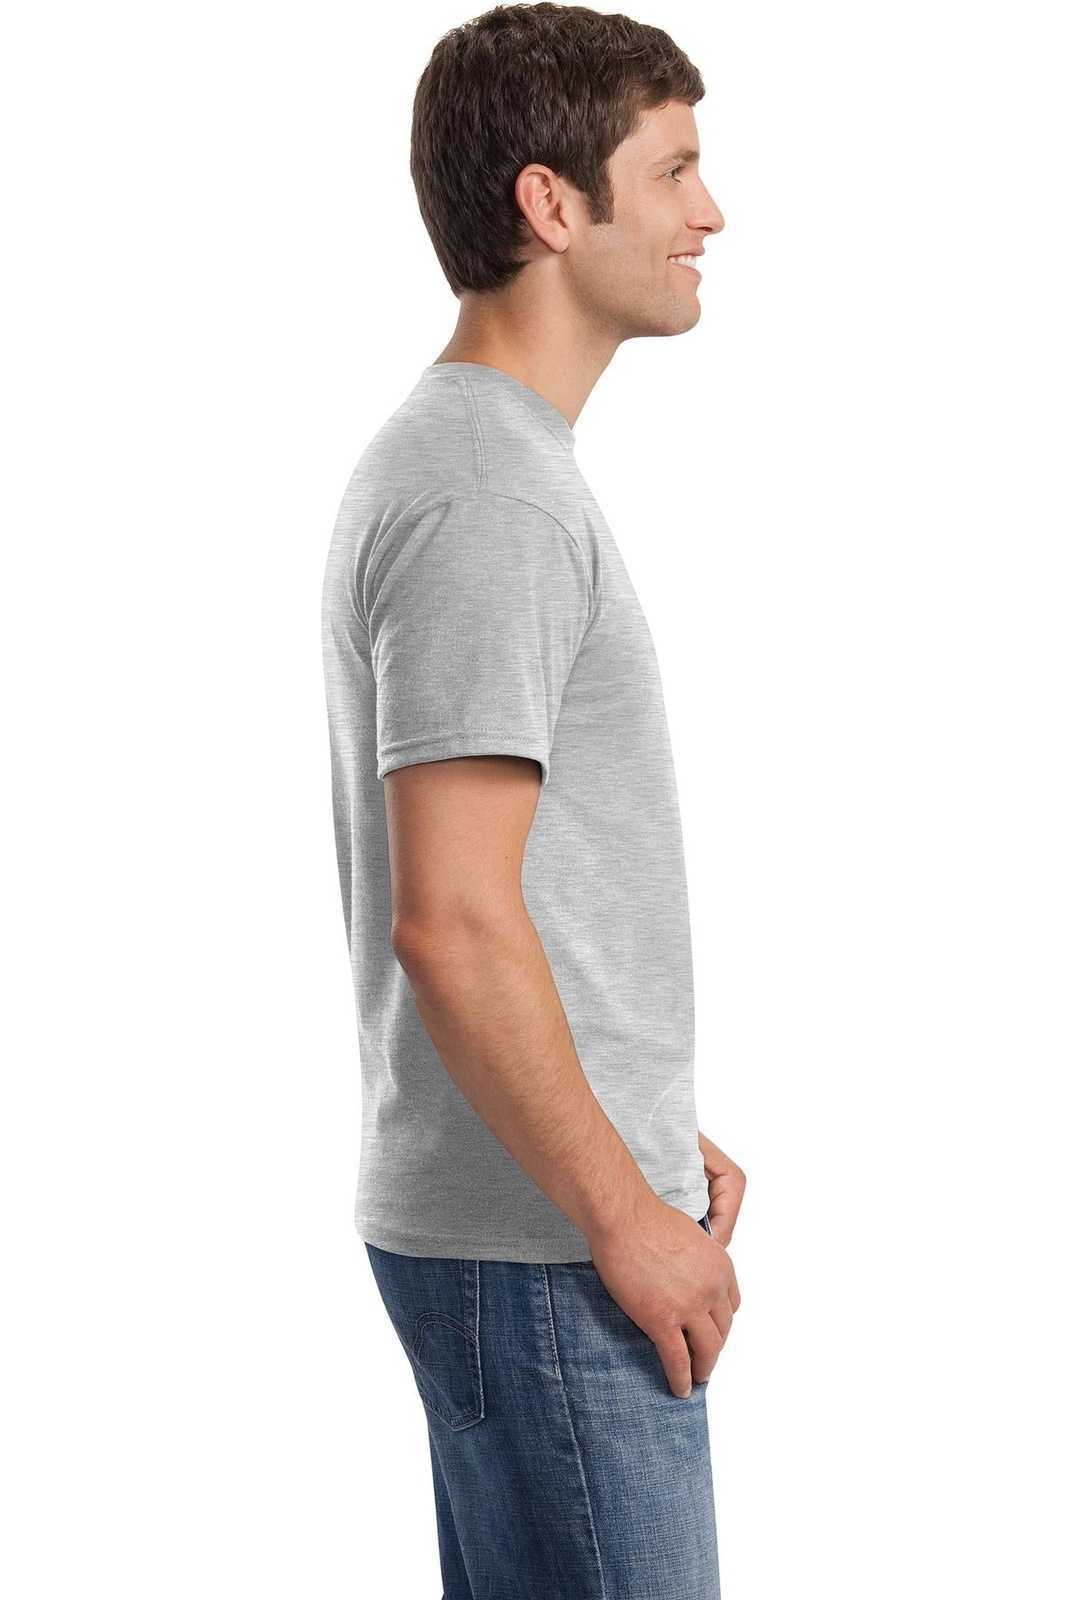 Gildan 2300 Ultra Cotton 100% Cotton T-Shirt with Pocket - Ash - HIT a Double